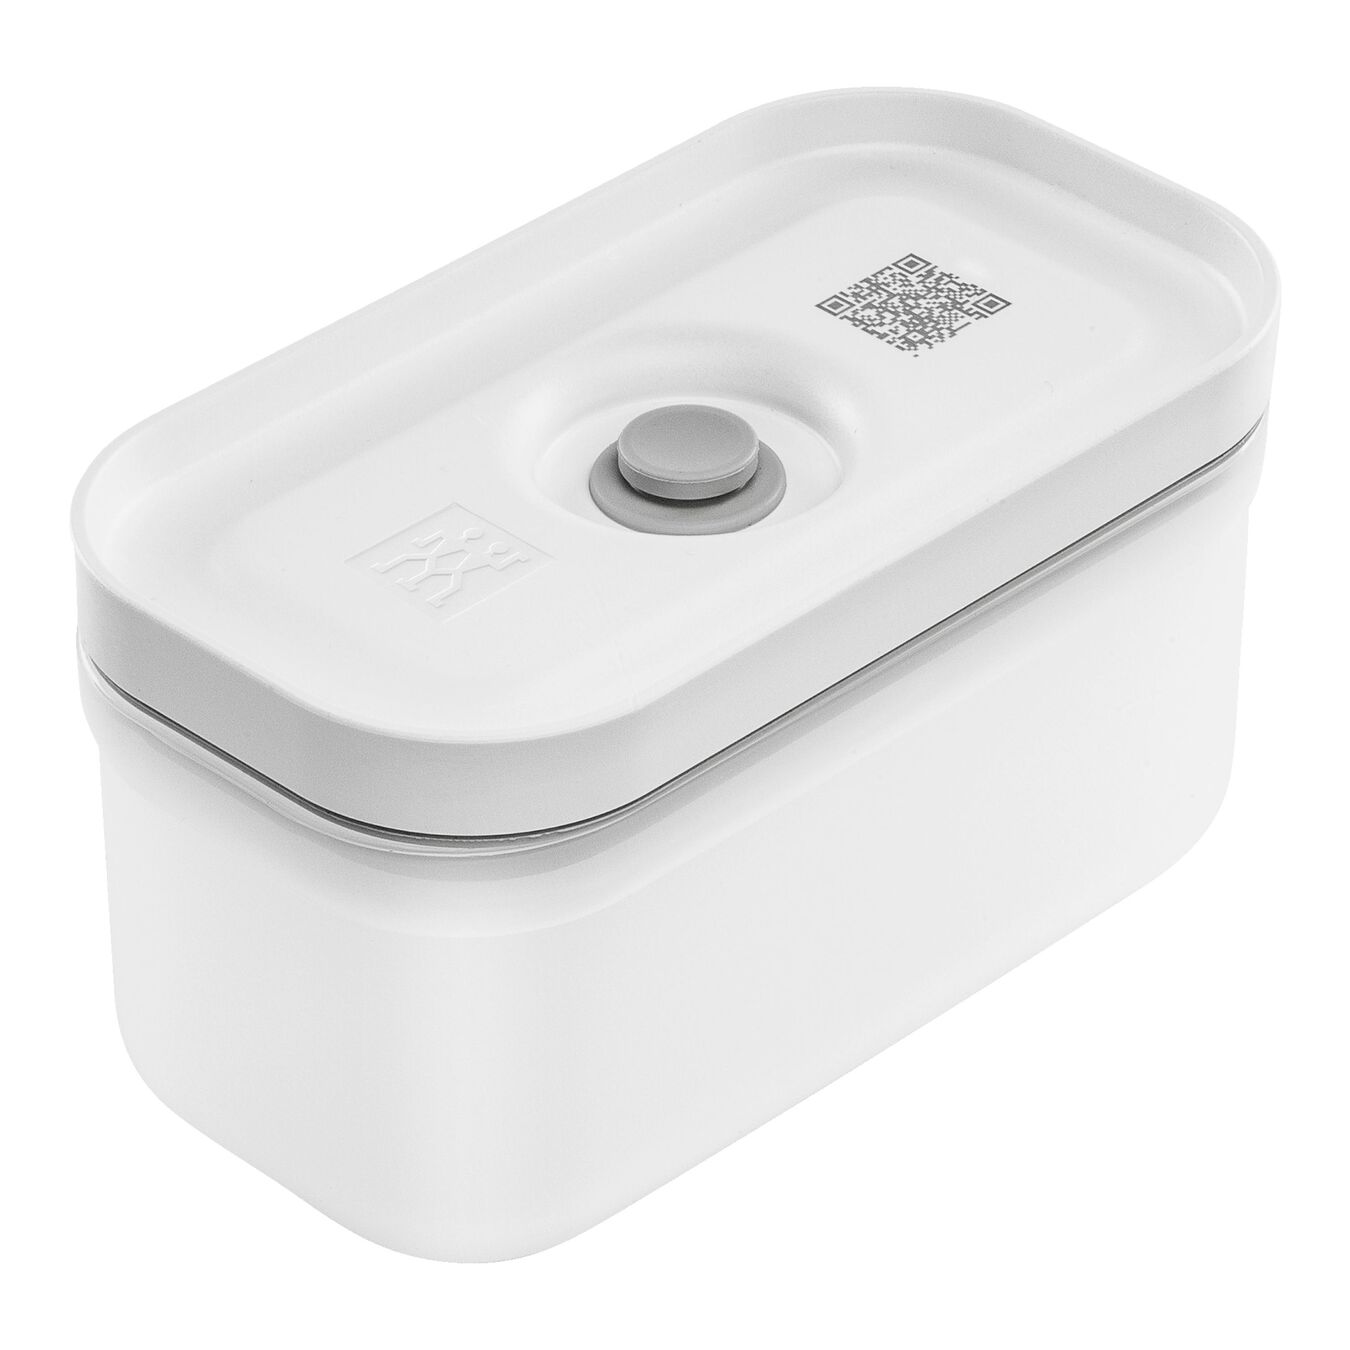 small Vacuum lunch box, plastic, semitransparent-grey,,large 1